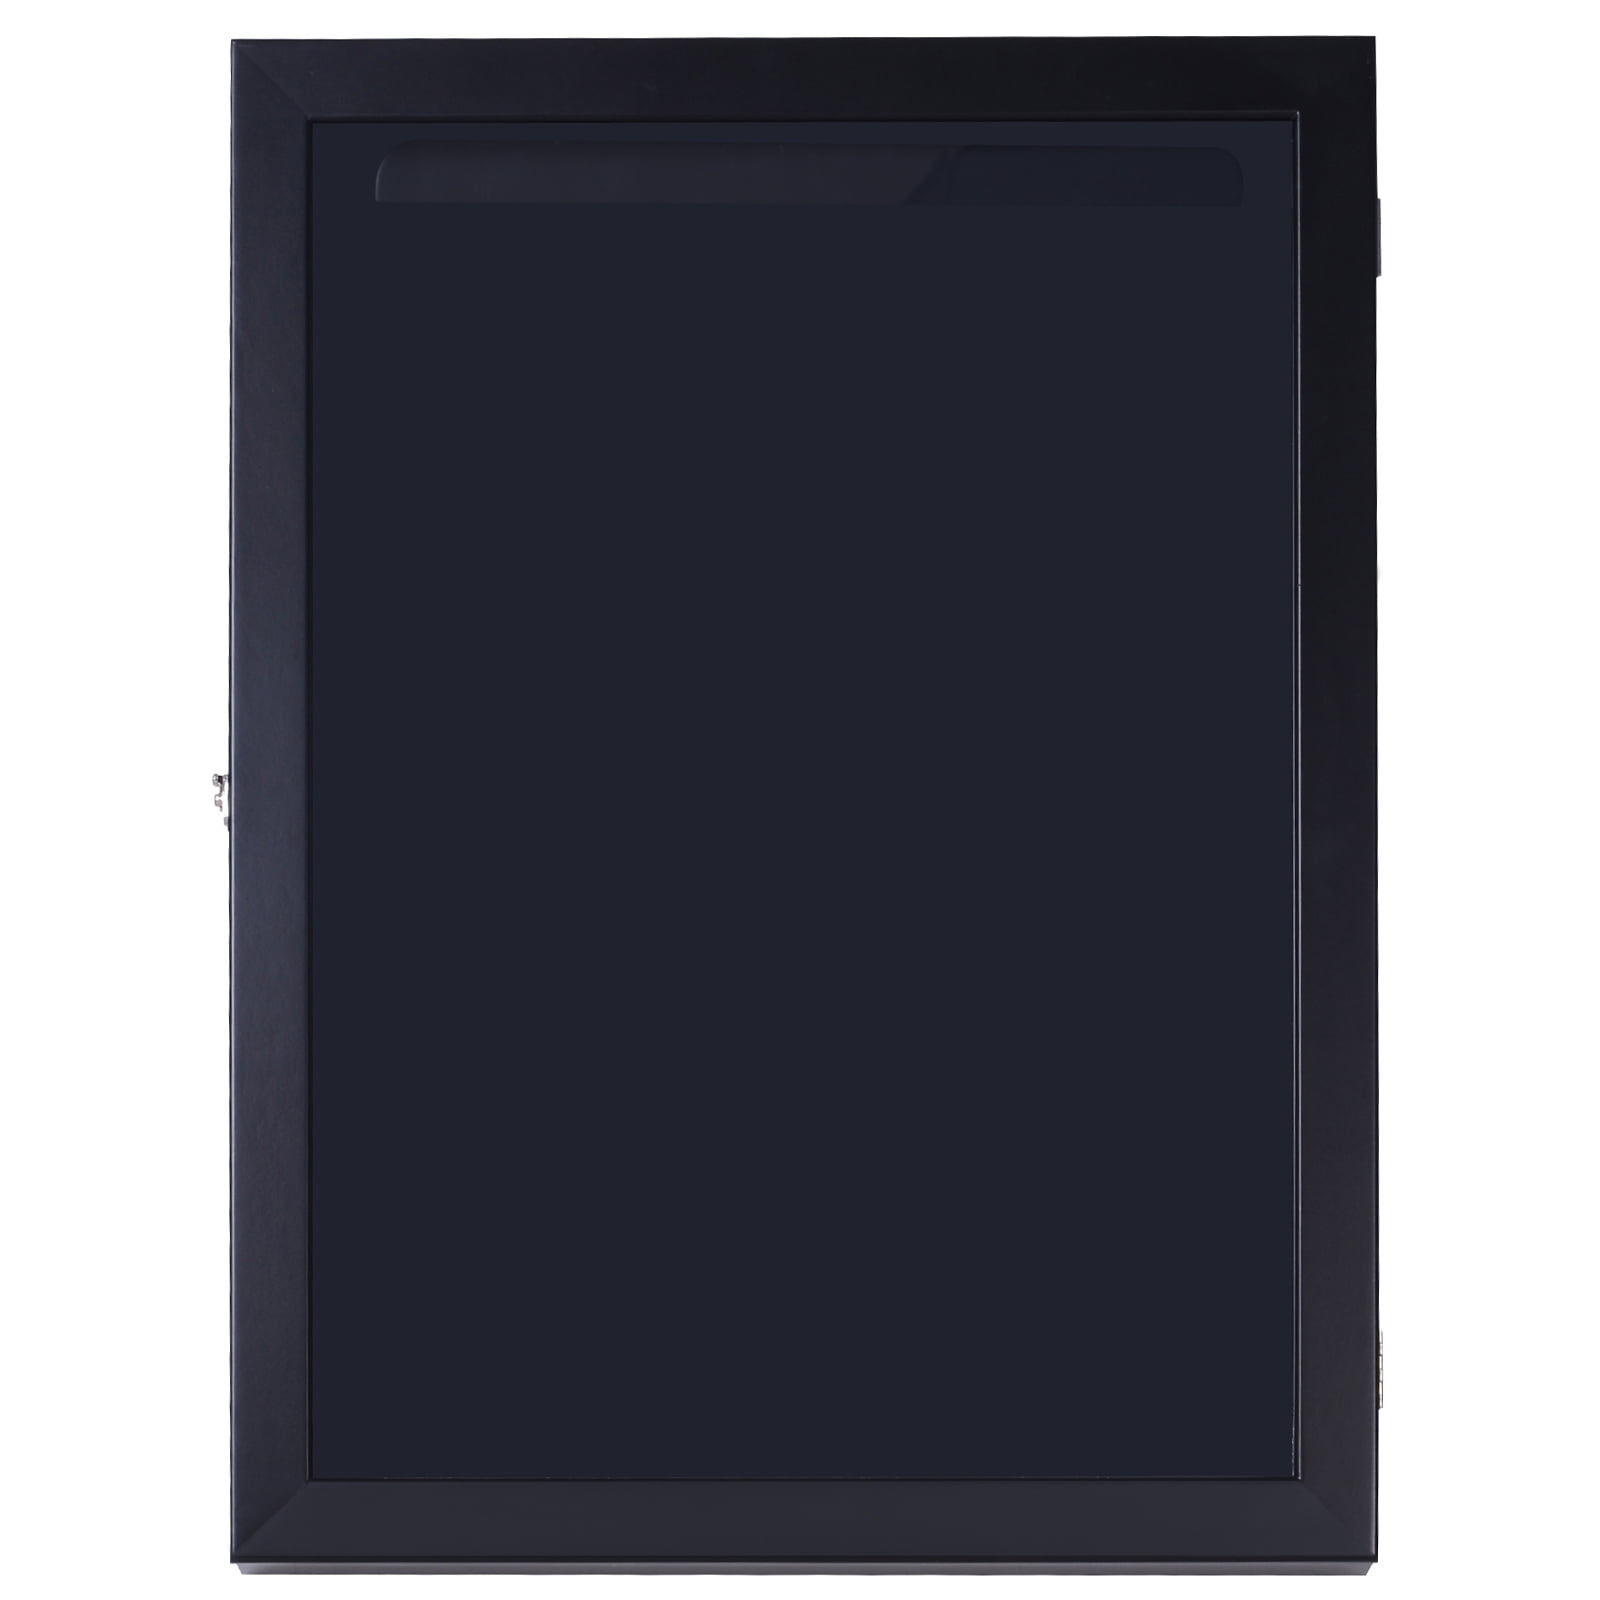 LG-CN56-BLA Black Lego Minifigures Display Case Wall Cabinet Shadow Box 